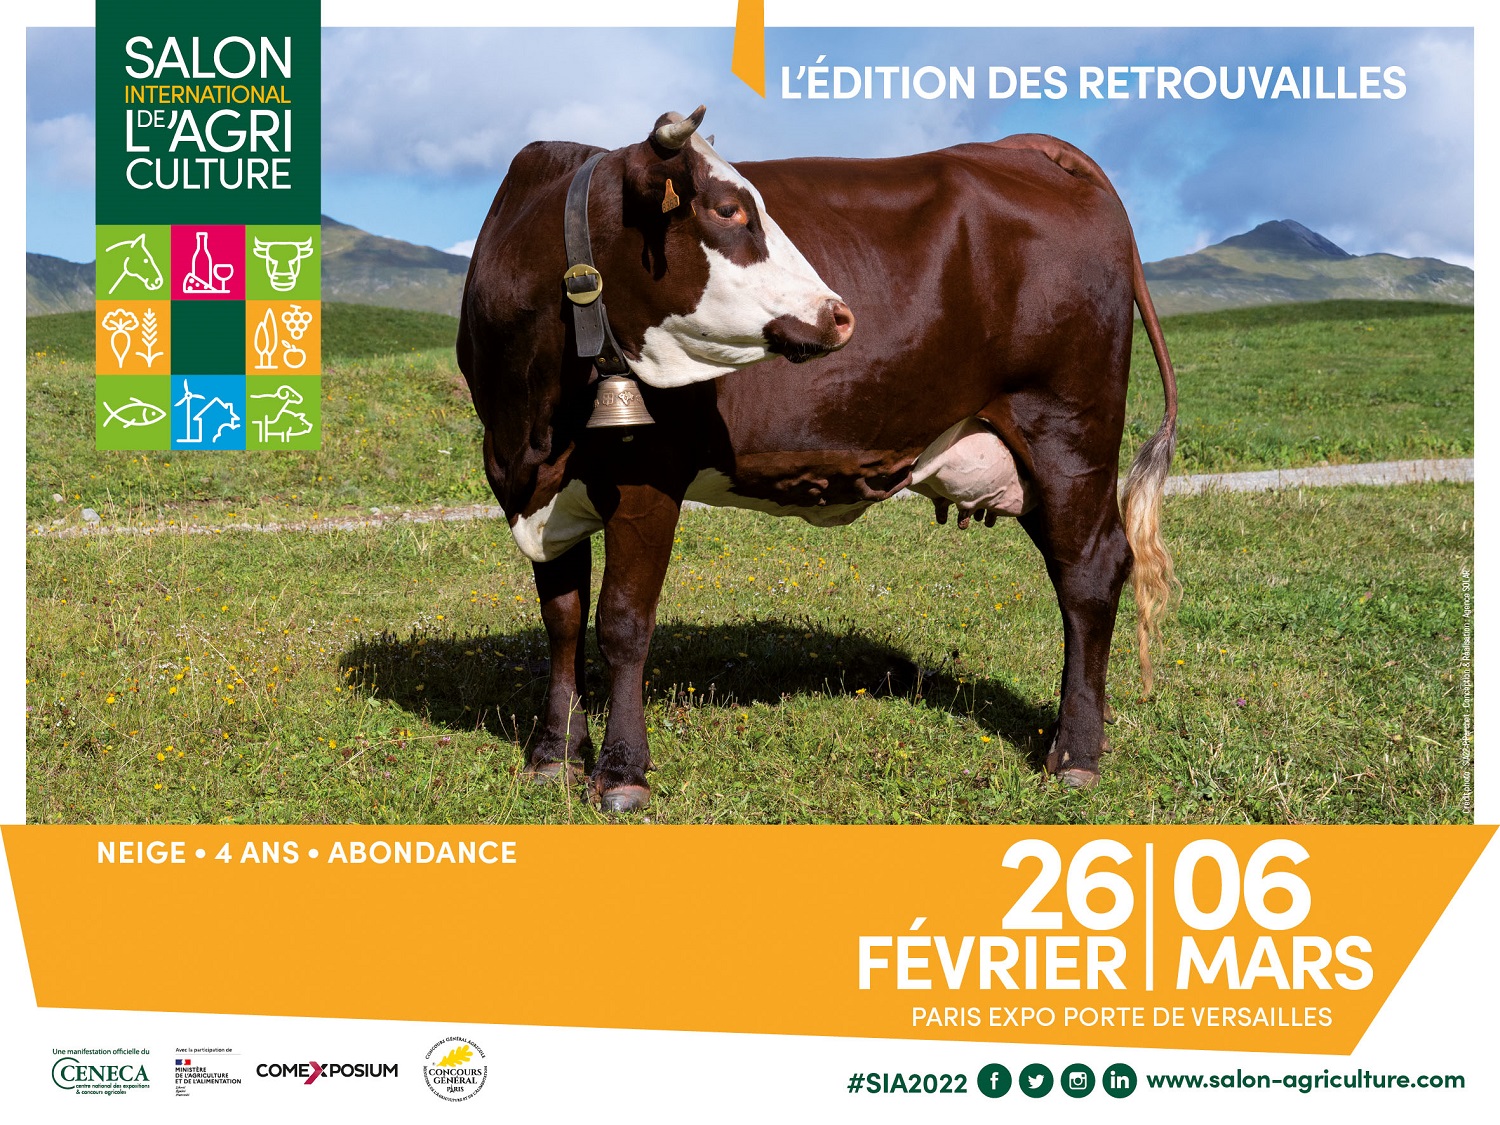 © Salon International de l'agriculture 2022